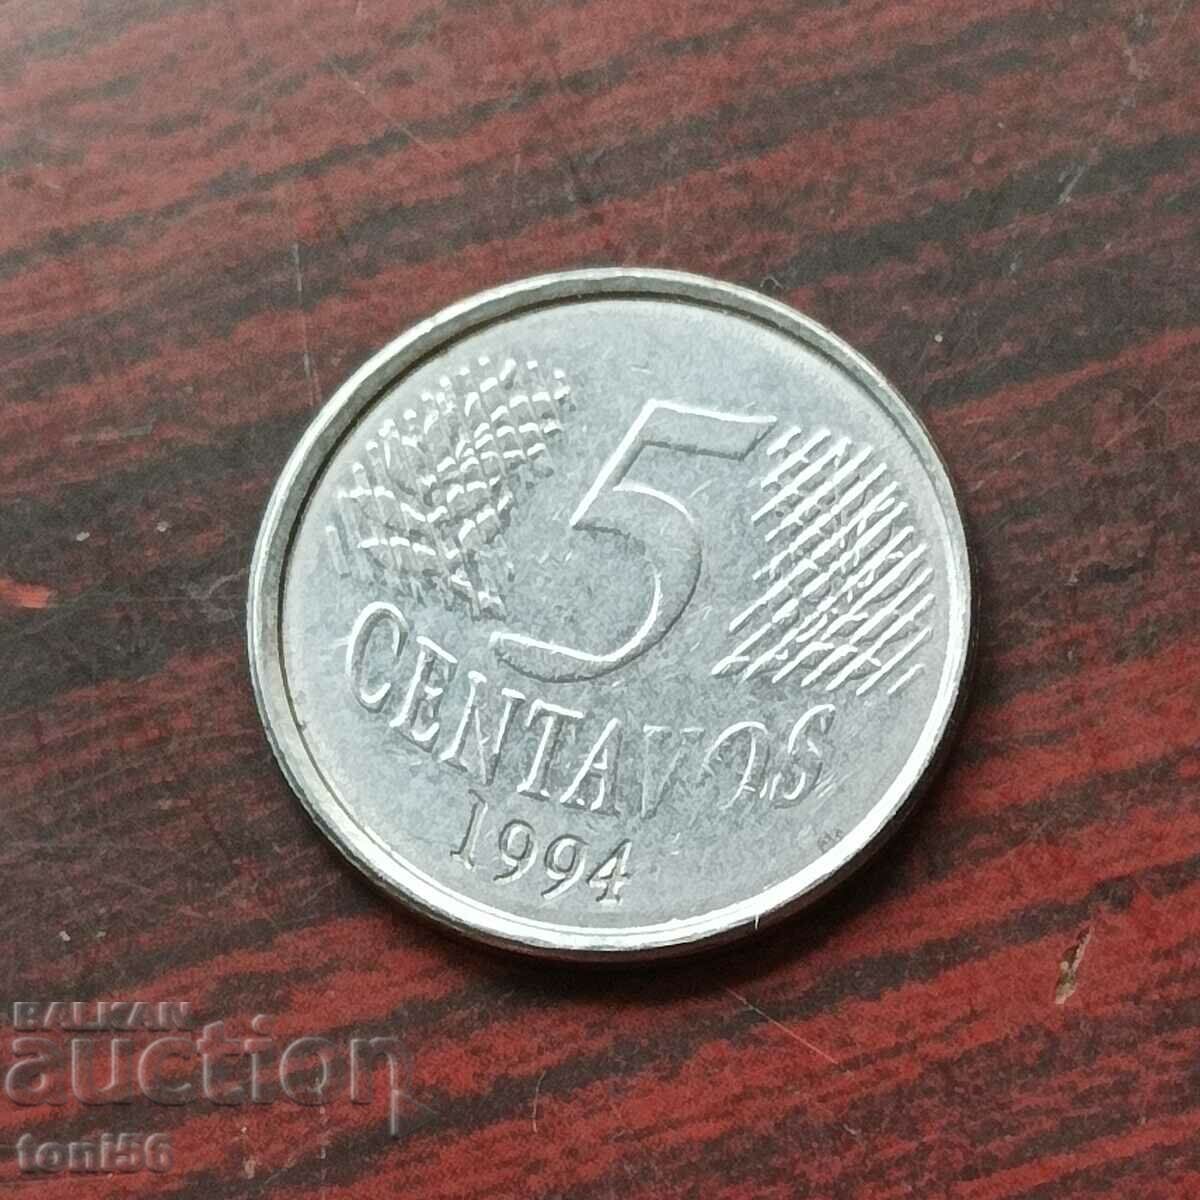 Brazil 5 centavos 1994